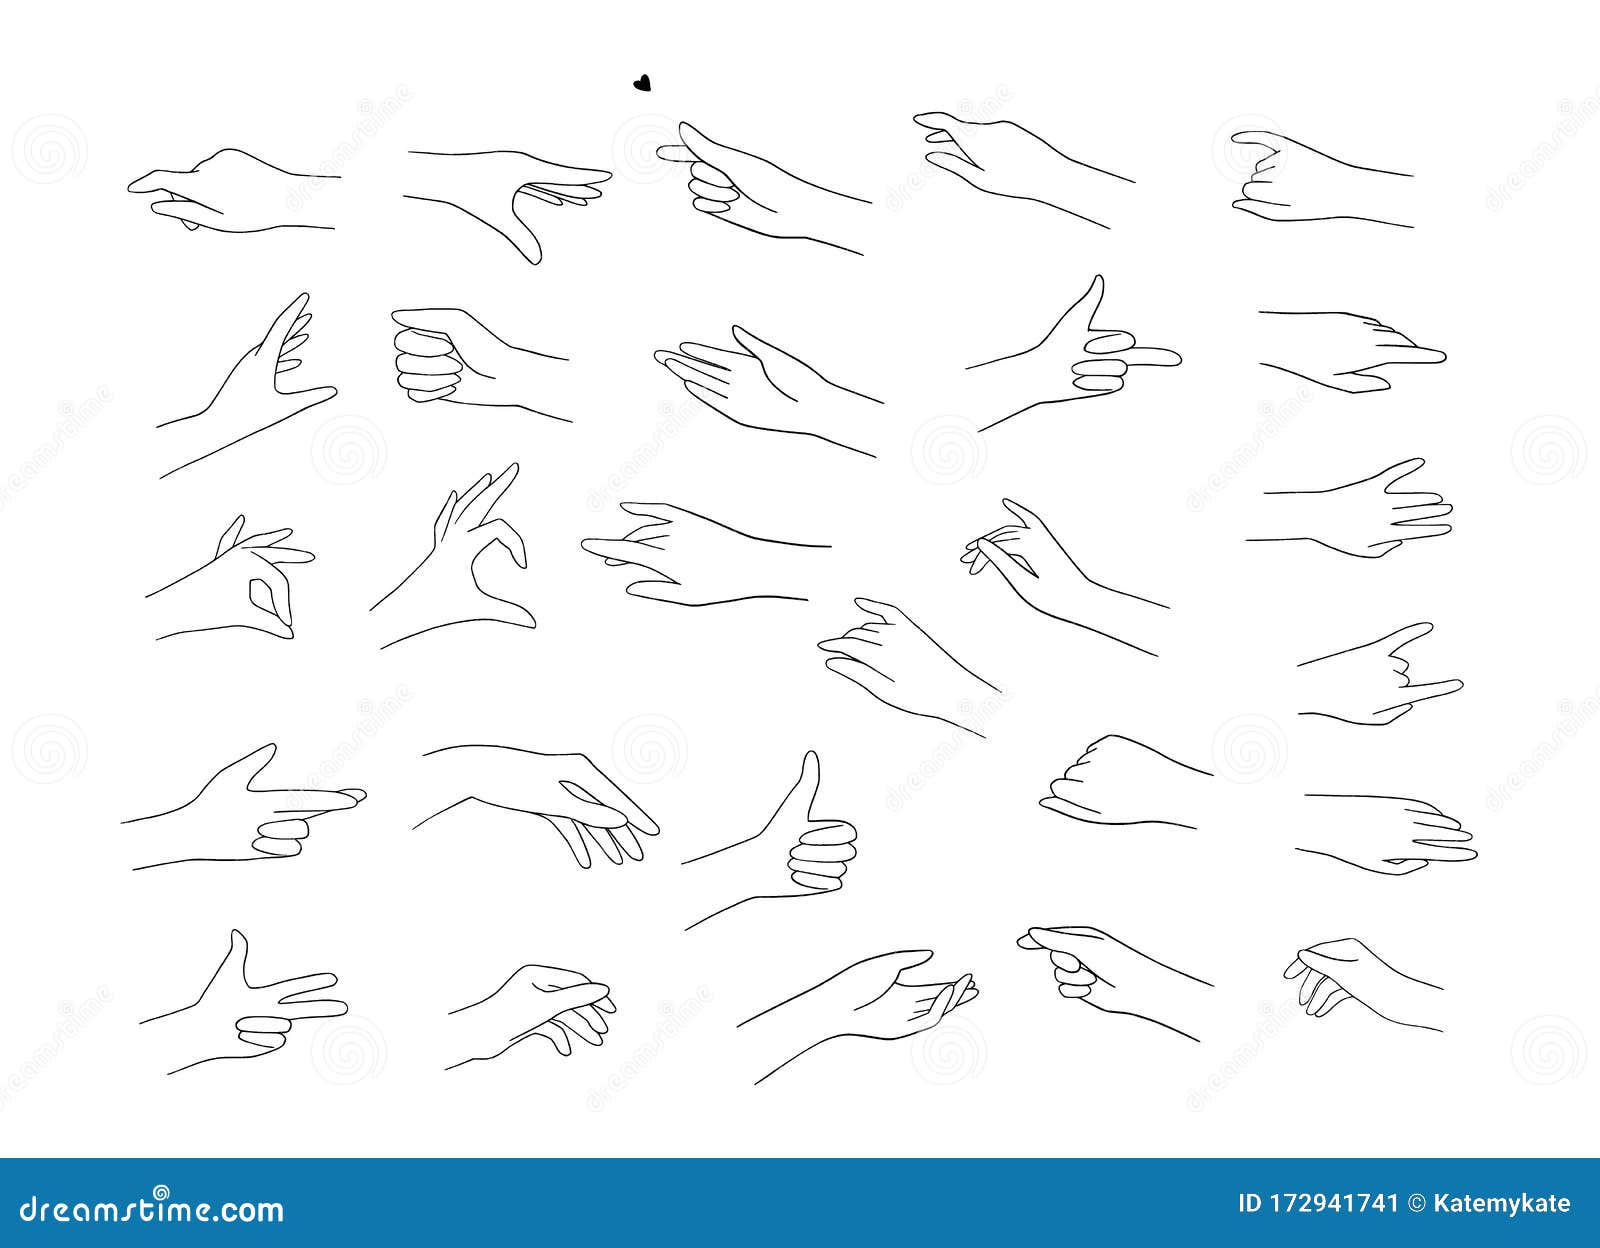 Hands Poses Reference sheet by Saviroosje on DeviantArt